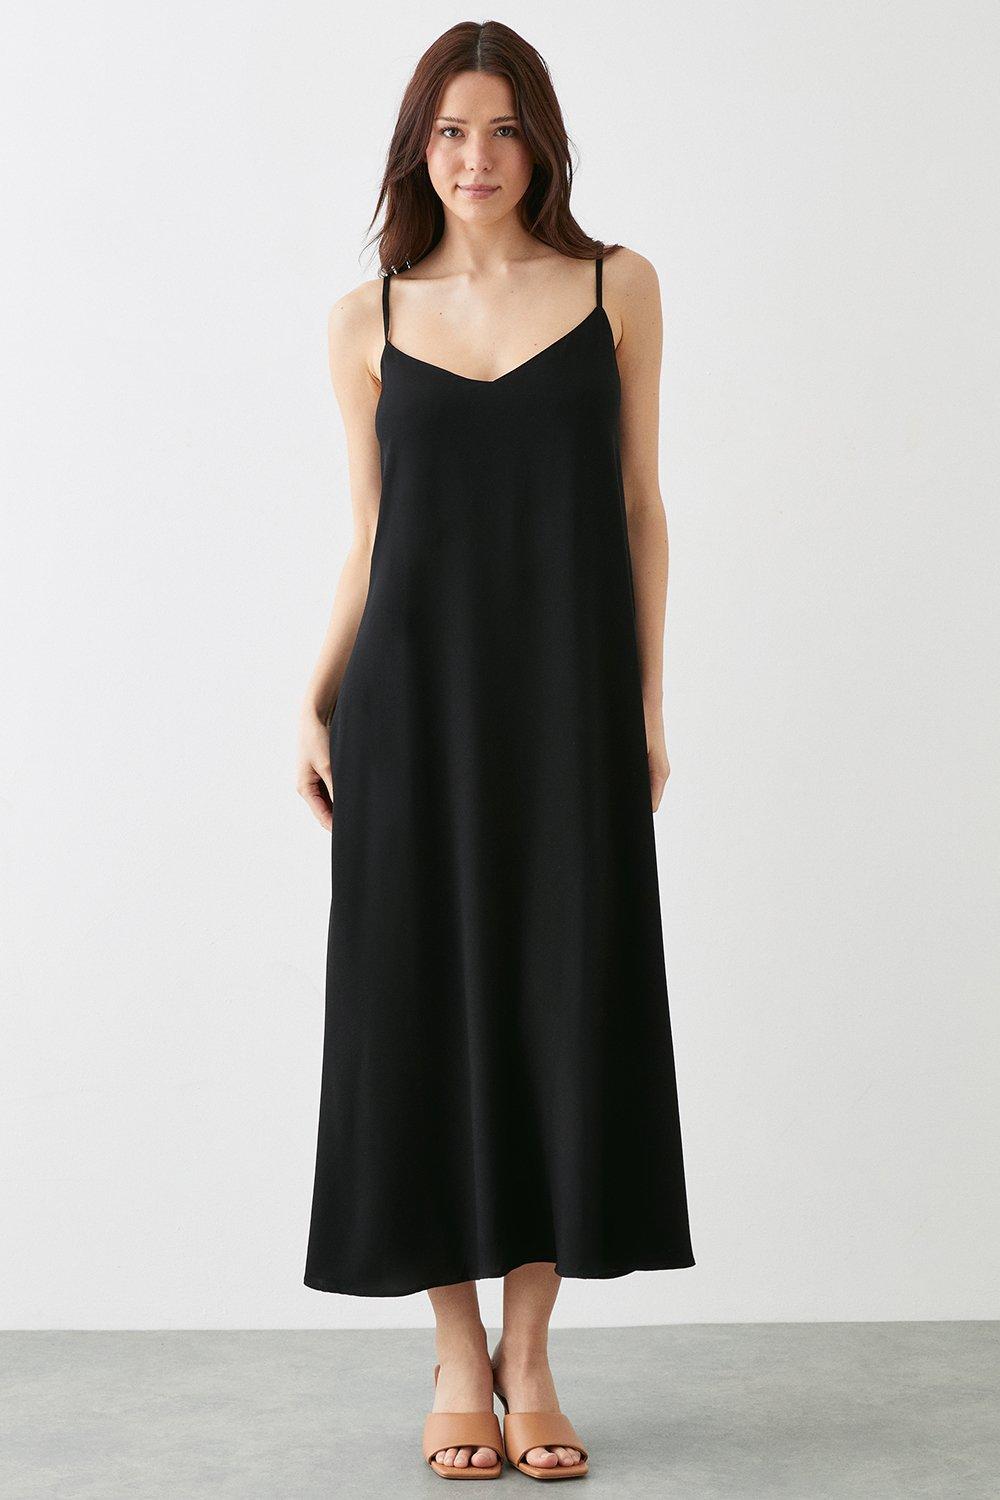 Women’s Strappy Midi Dress - black - S